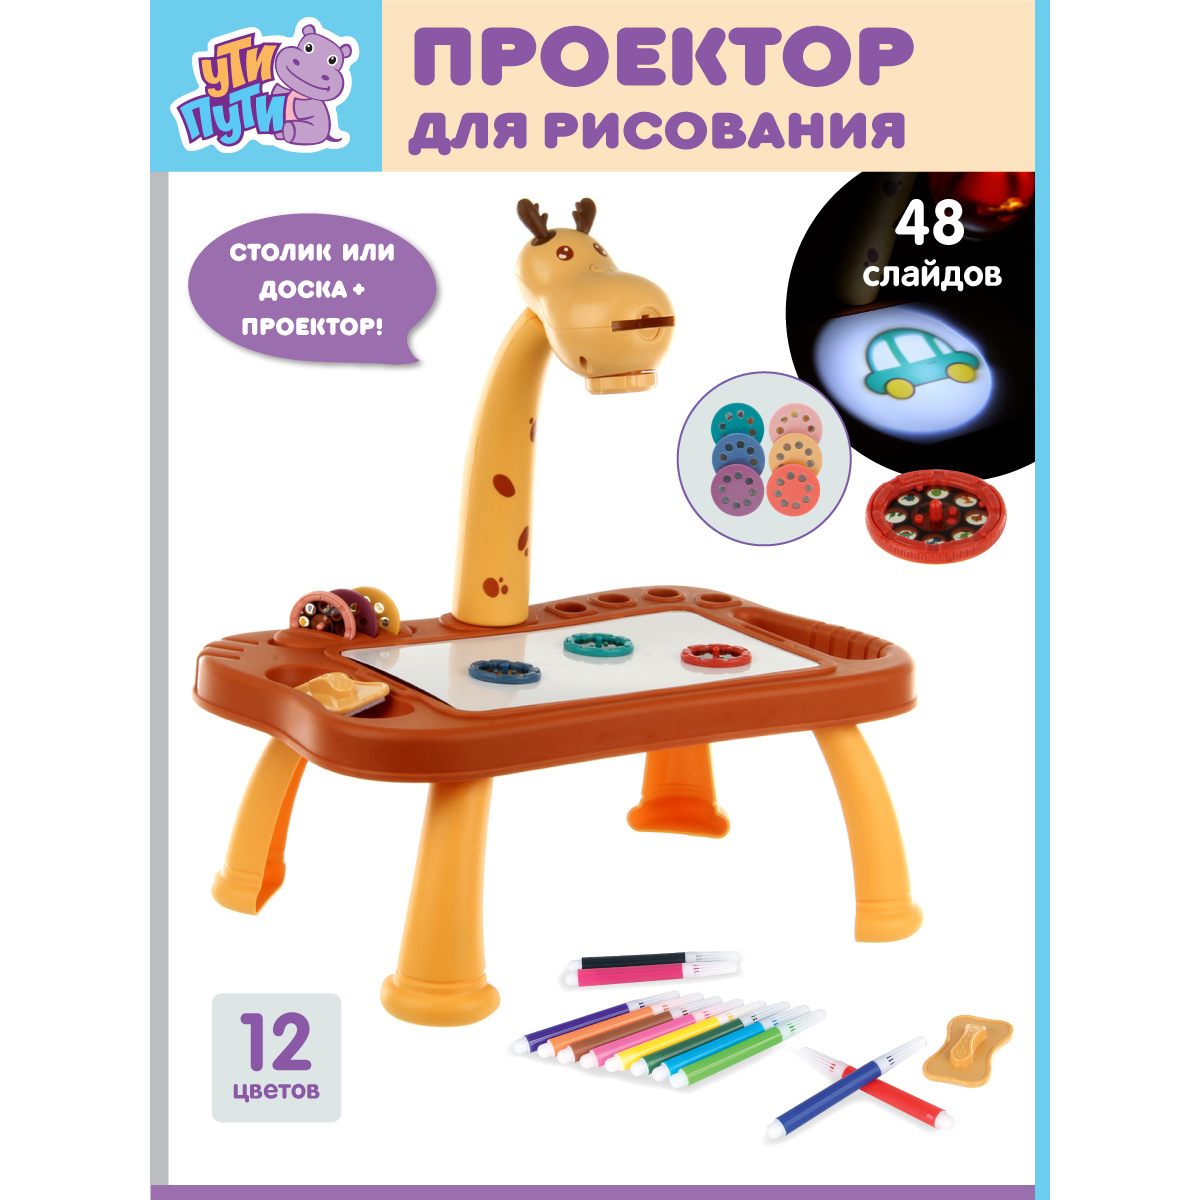 Развивающий столик Ути Пути доска для рисования с проектором Жирафик - фото 1